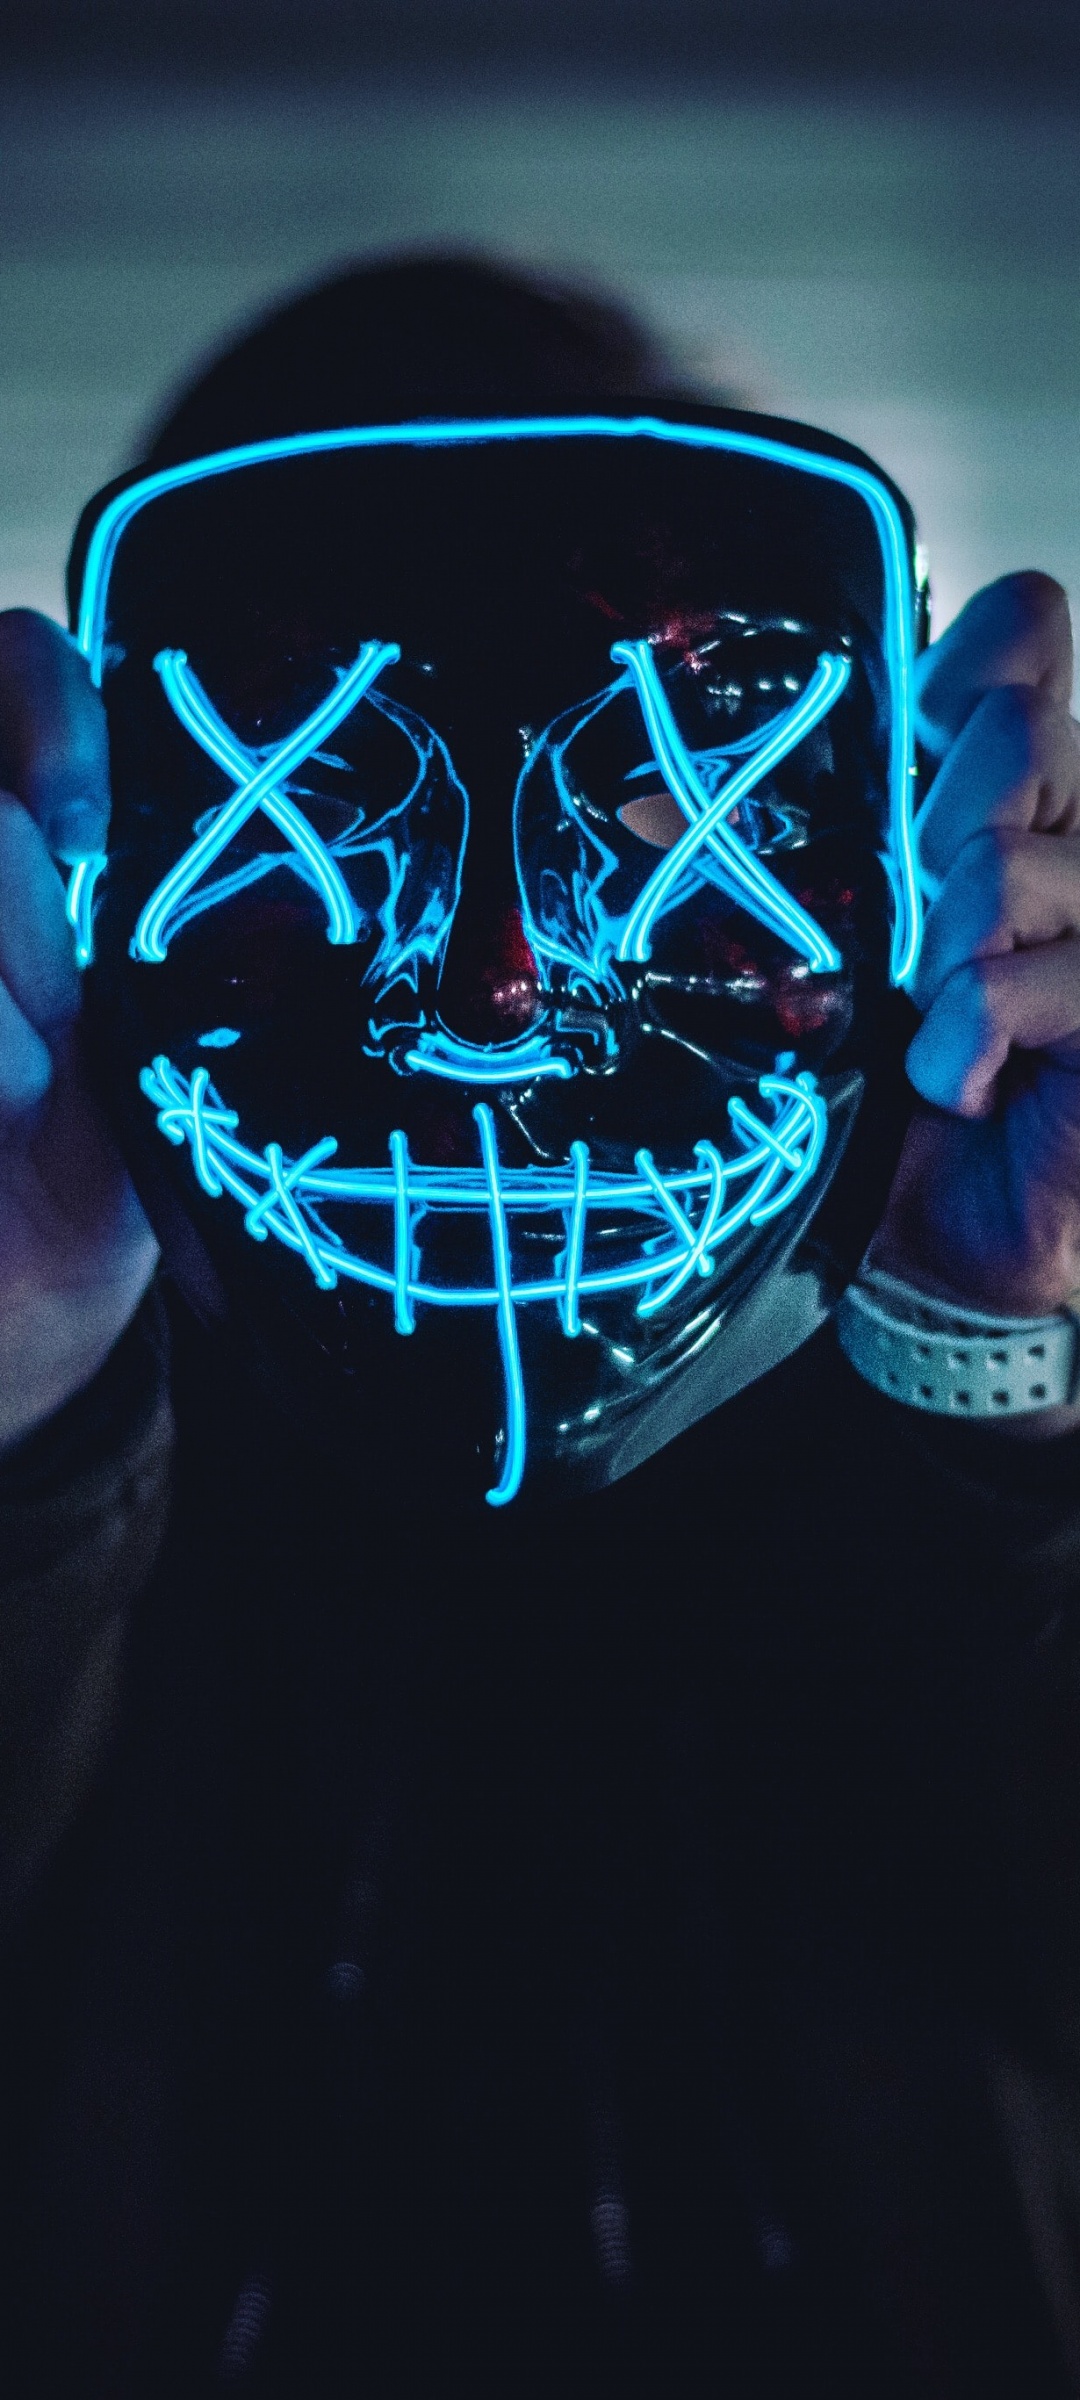 Neon Mask Wallpaper 4K, Blue Lights, Portrait, Photography, #2159